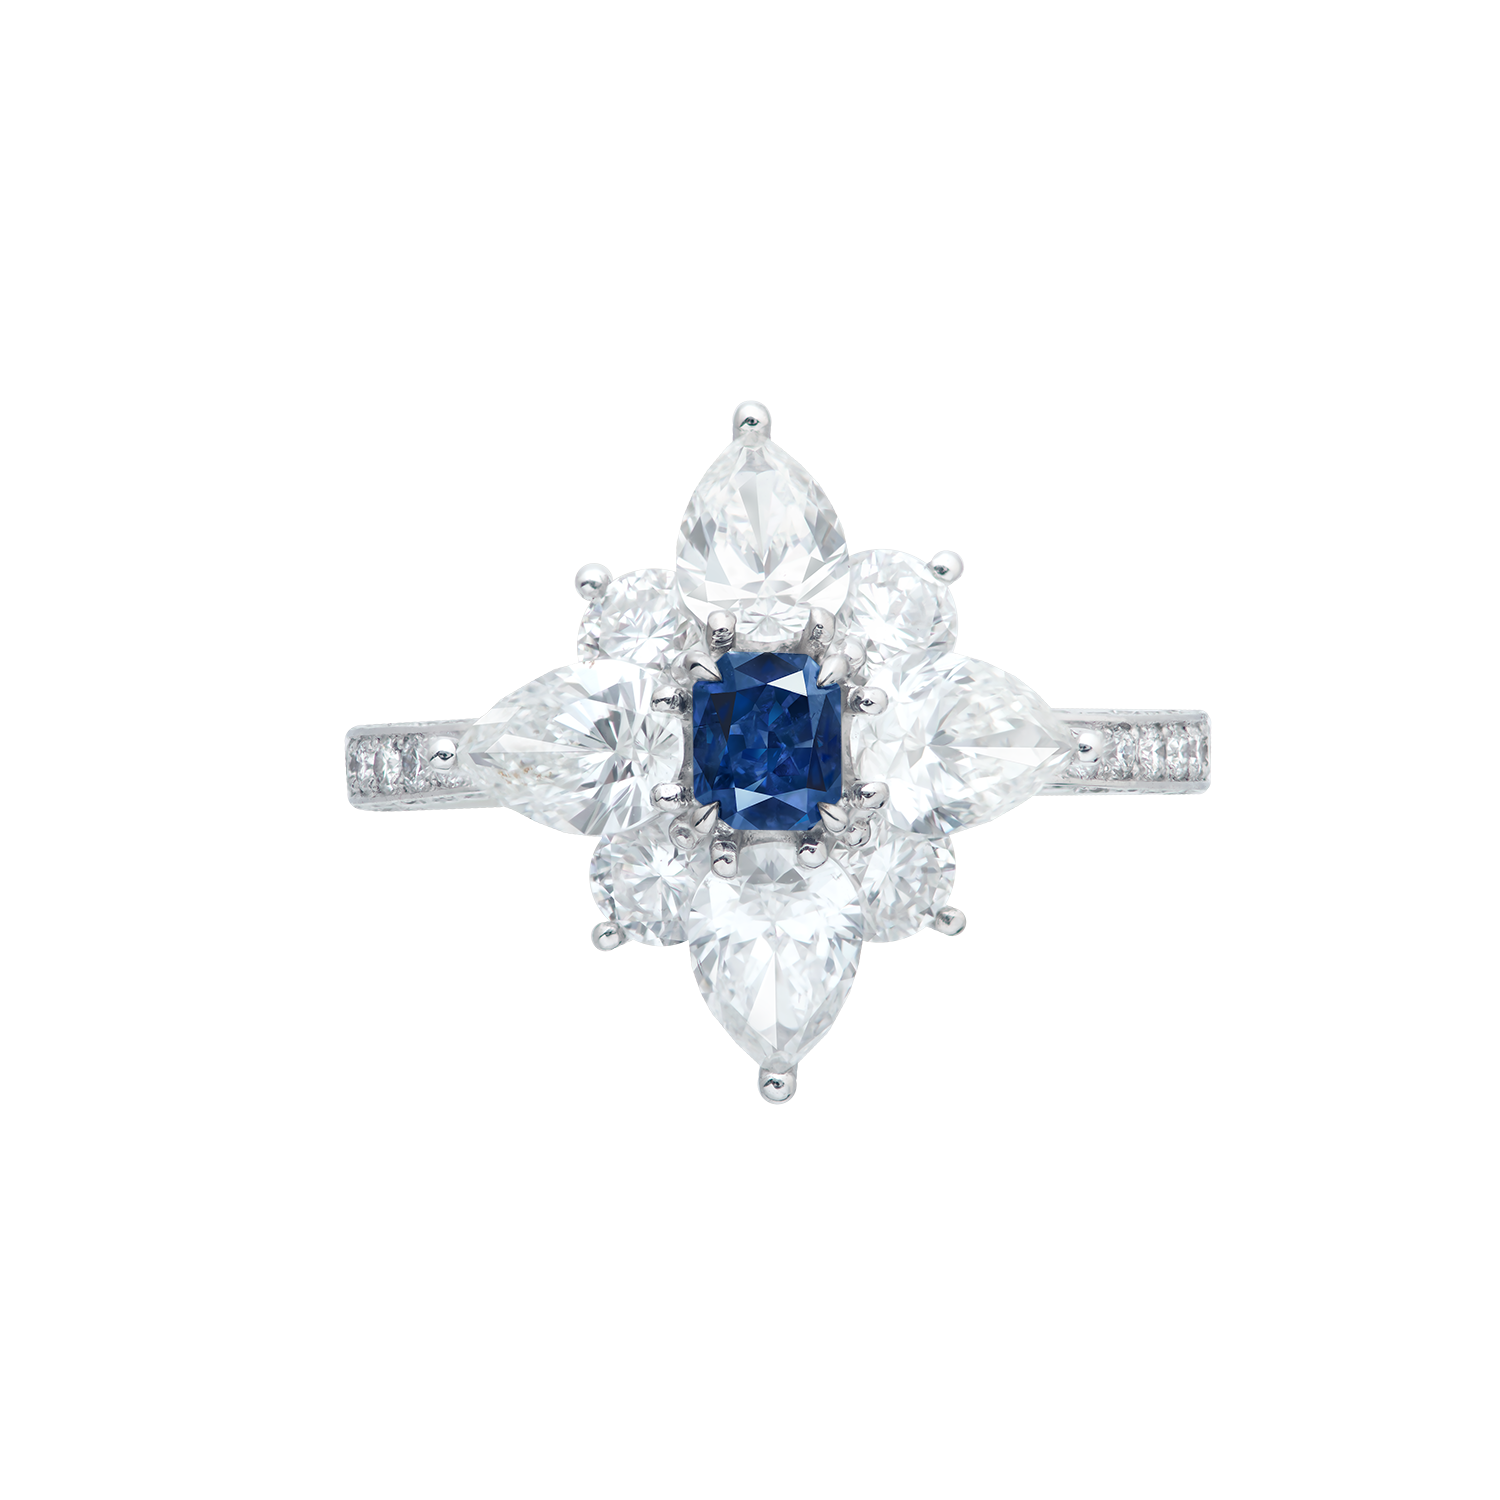 GIA 0.23克拉 暗彩灰藍鑽鑽戒
Fancy Dark Gray- Blue Colored 
Diamond and Diamond Ring